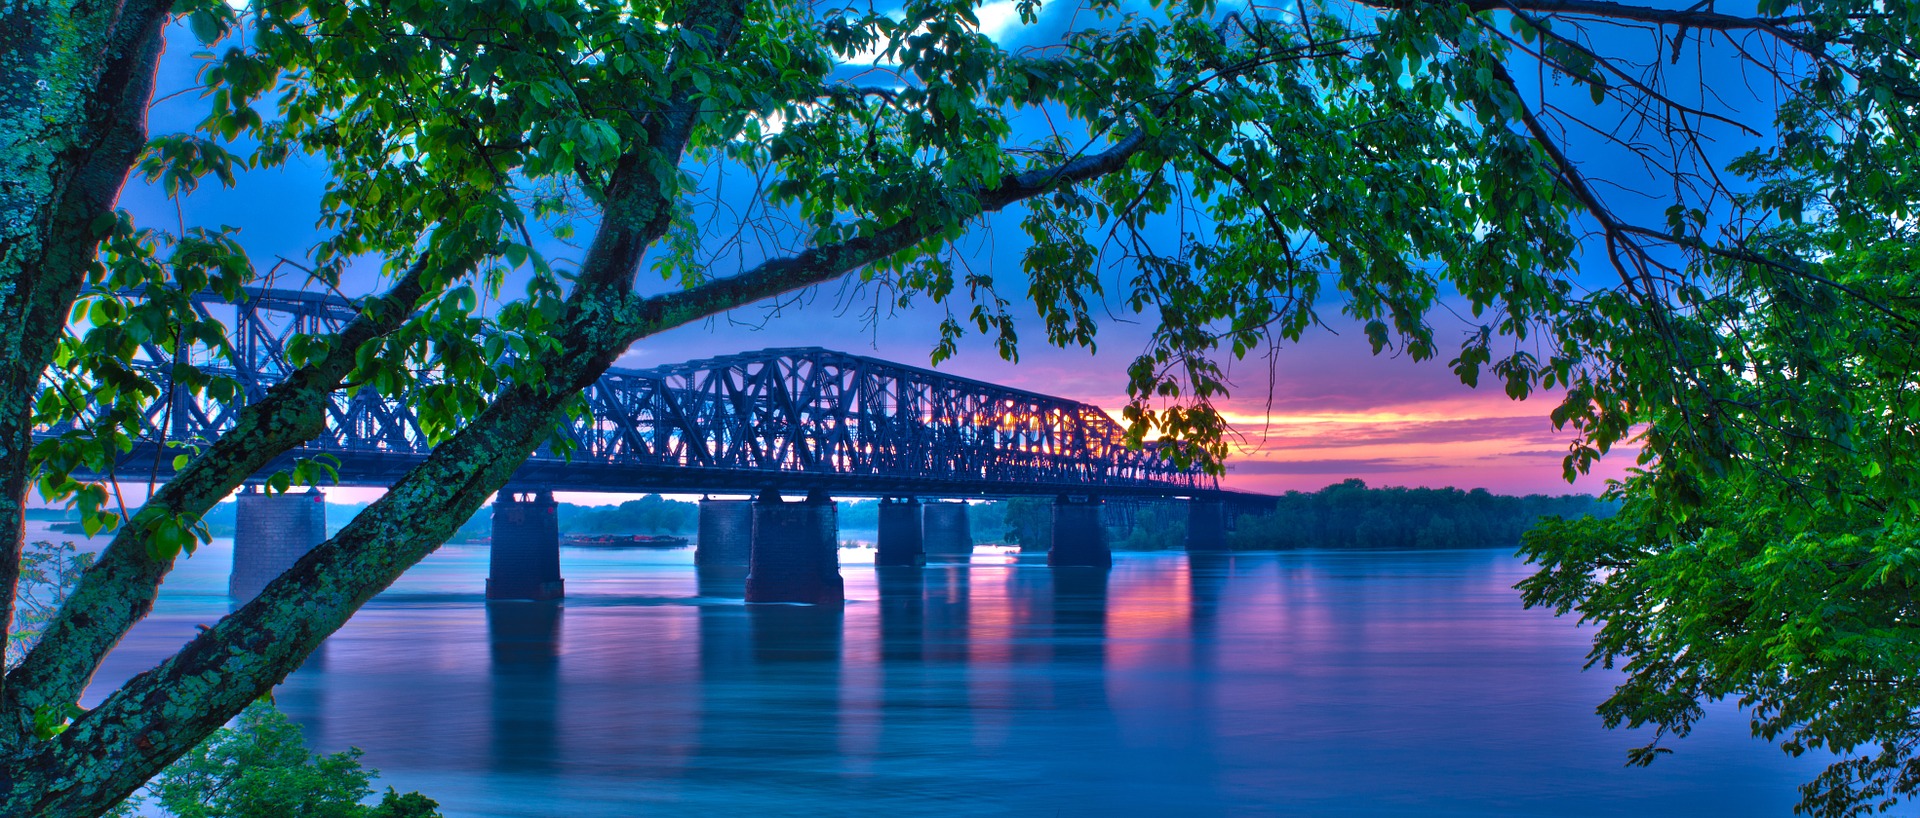 Mississippi bridge